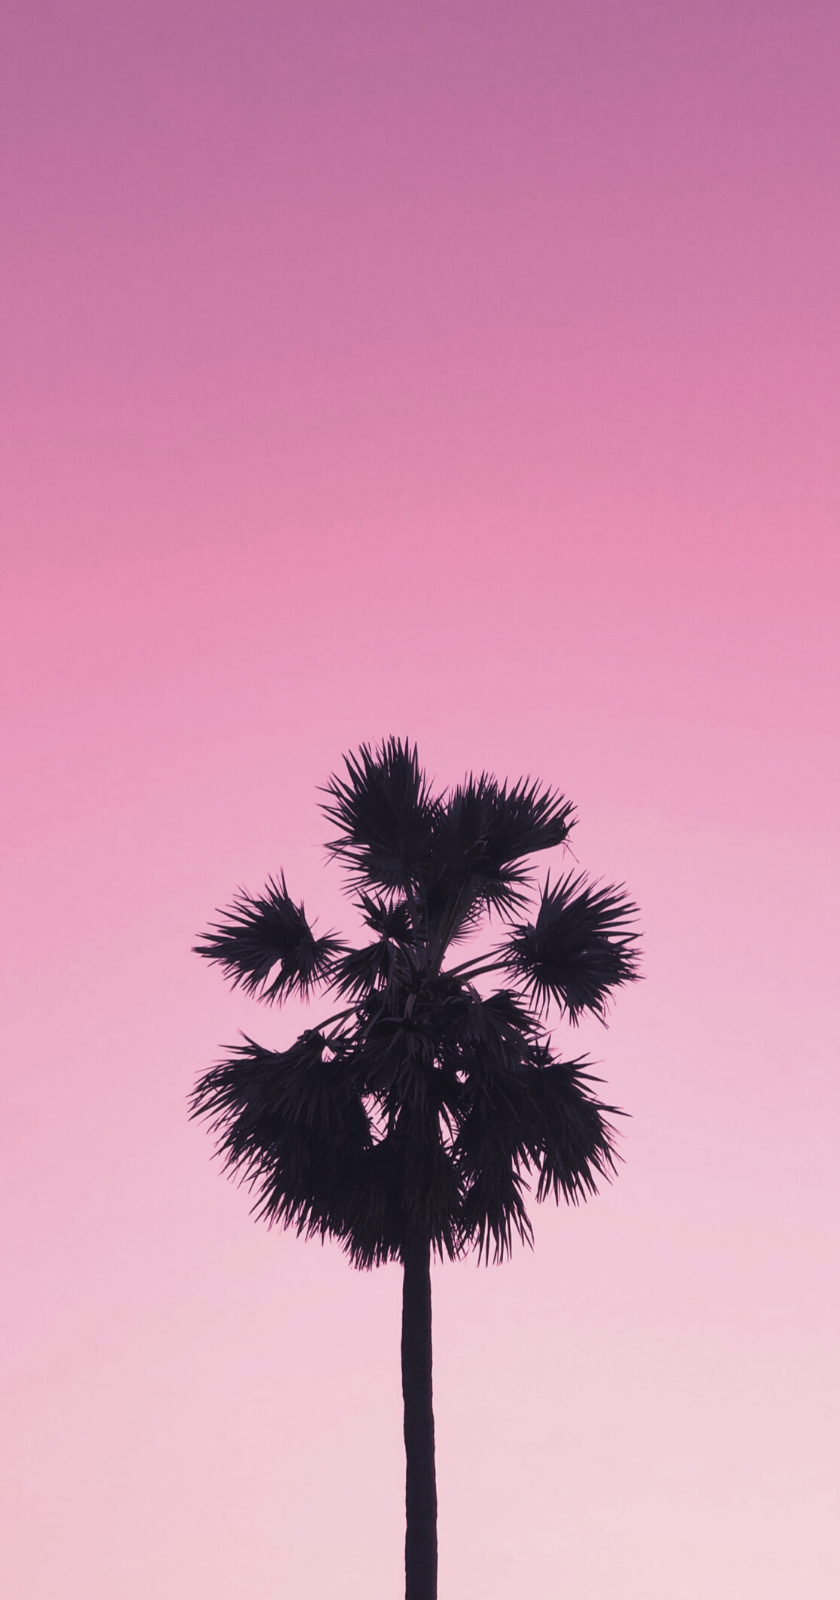 pink vibe wallpaper